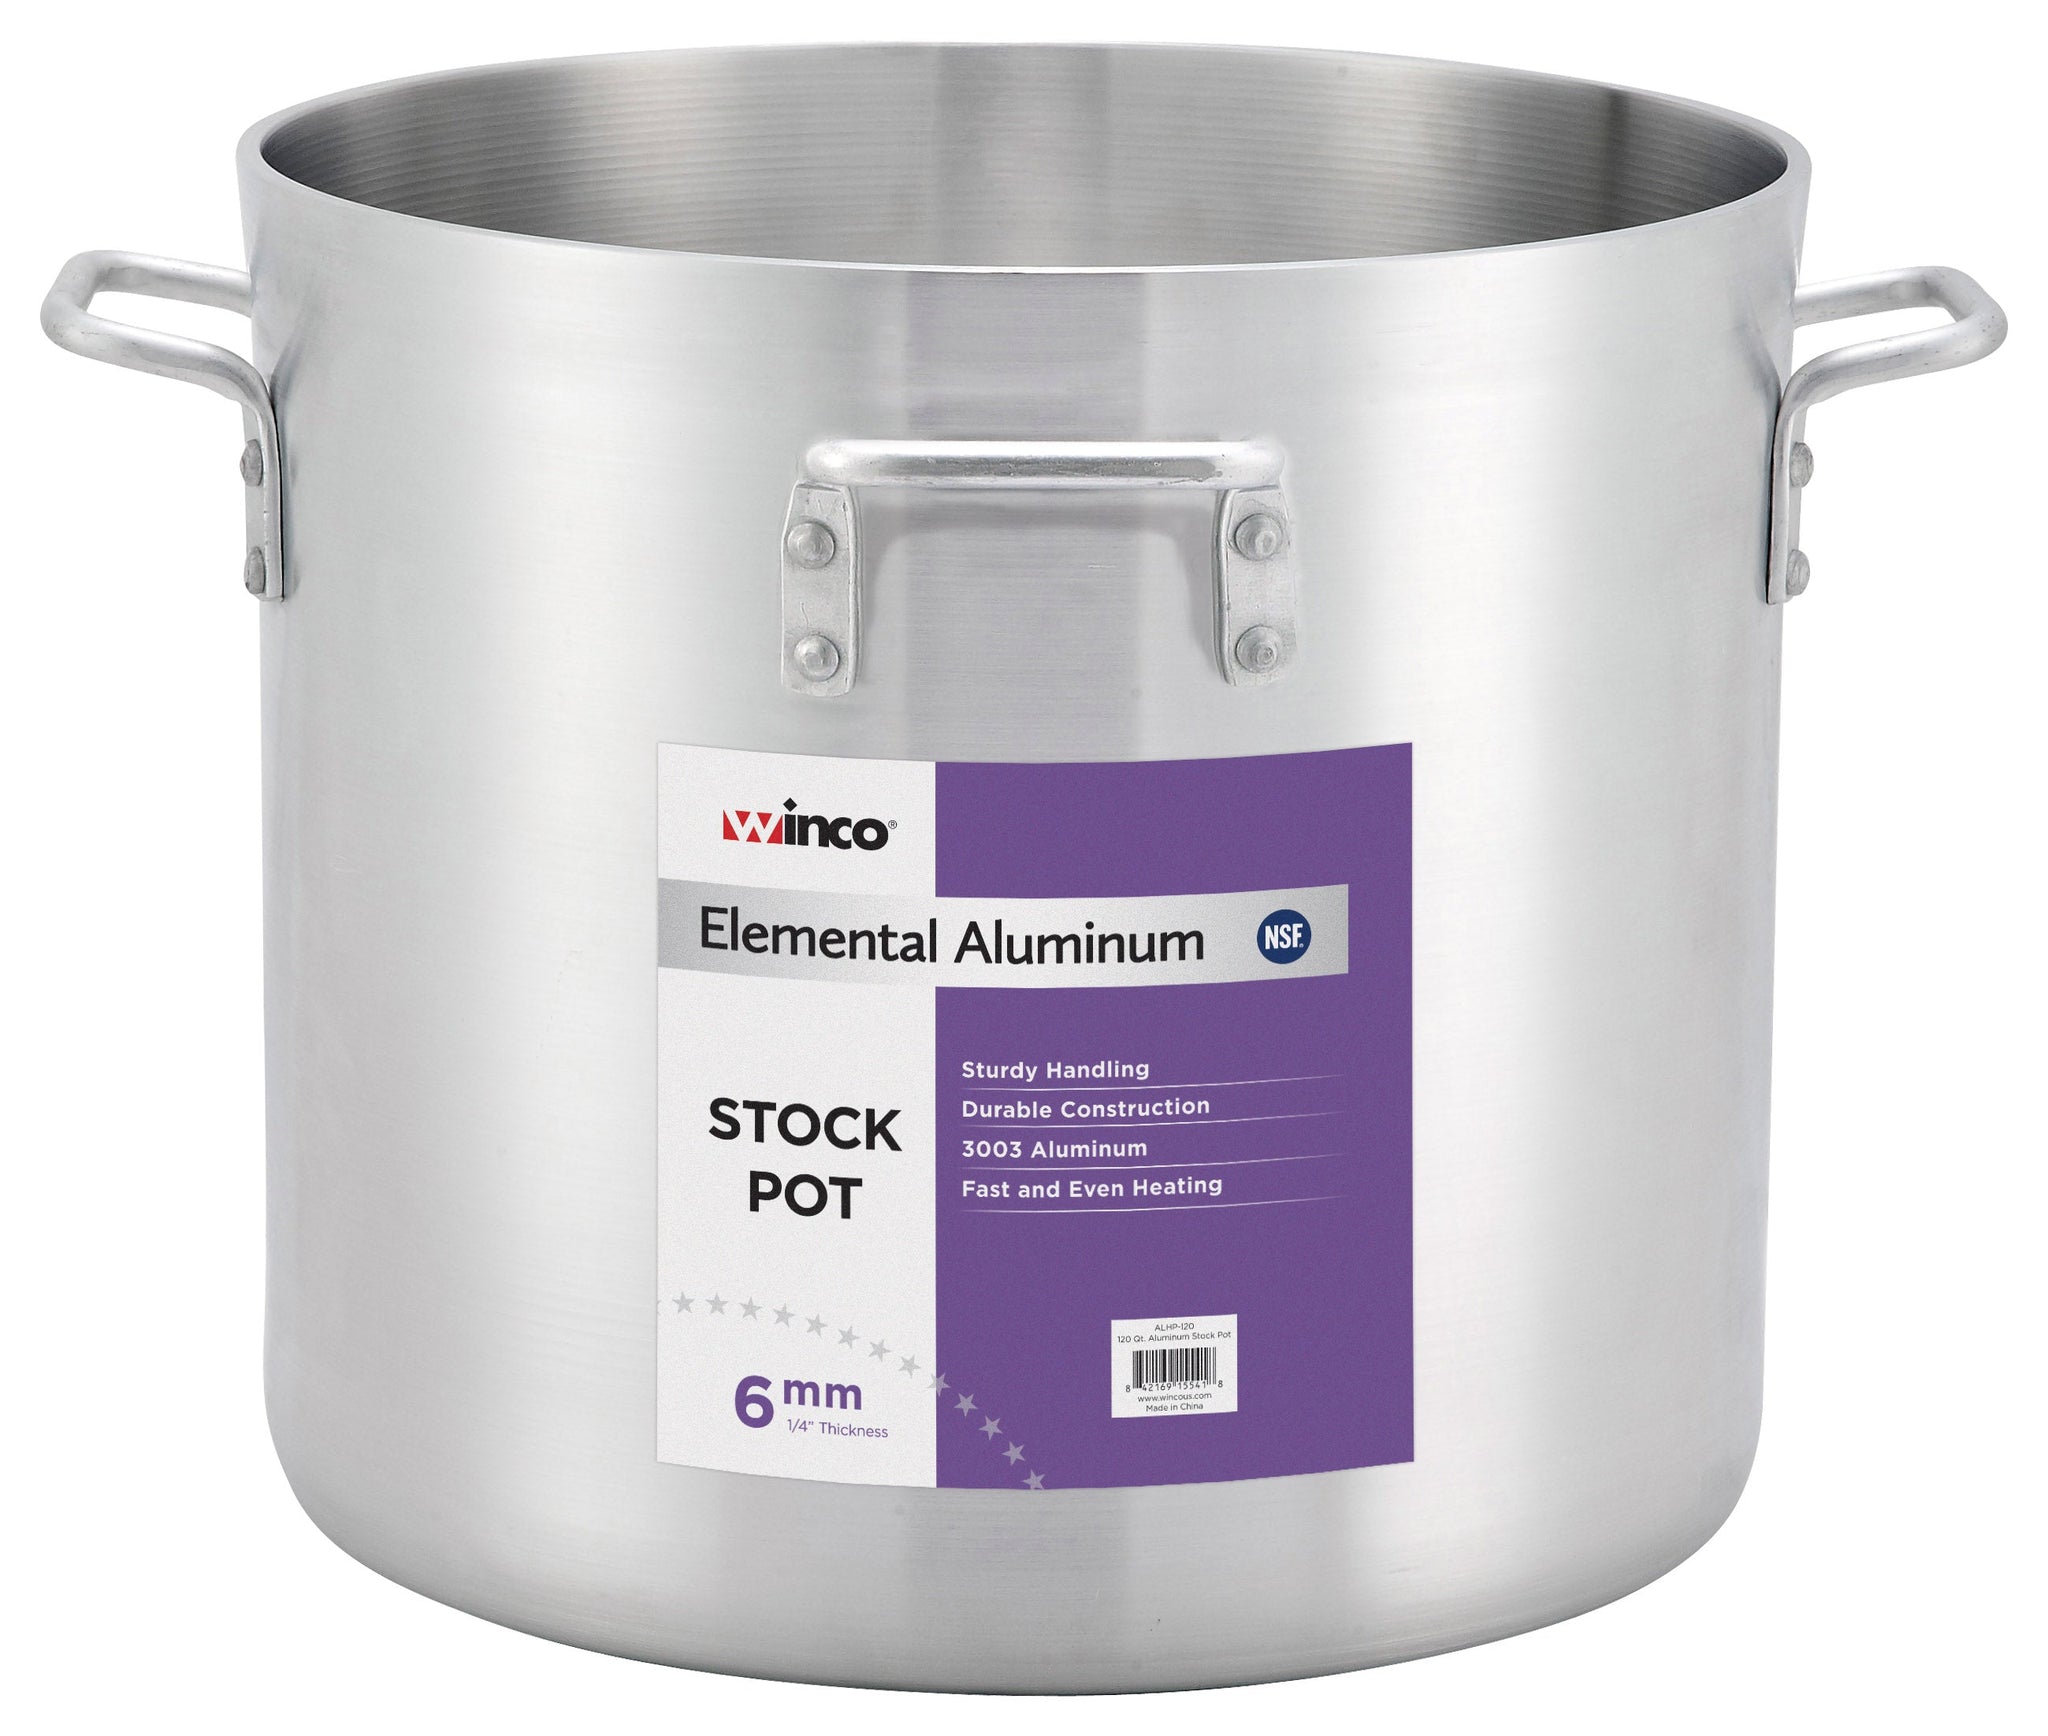 Winco ALHP-120 Elemental Stock Pot, 120 qt., 21-5/8" x 19-1/2", With, (4) Handles, 6mm, 3003 Aluminum, NSF